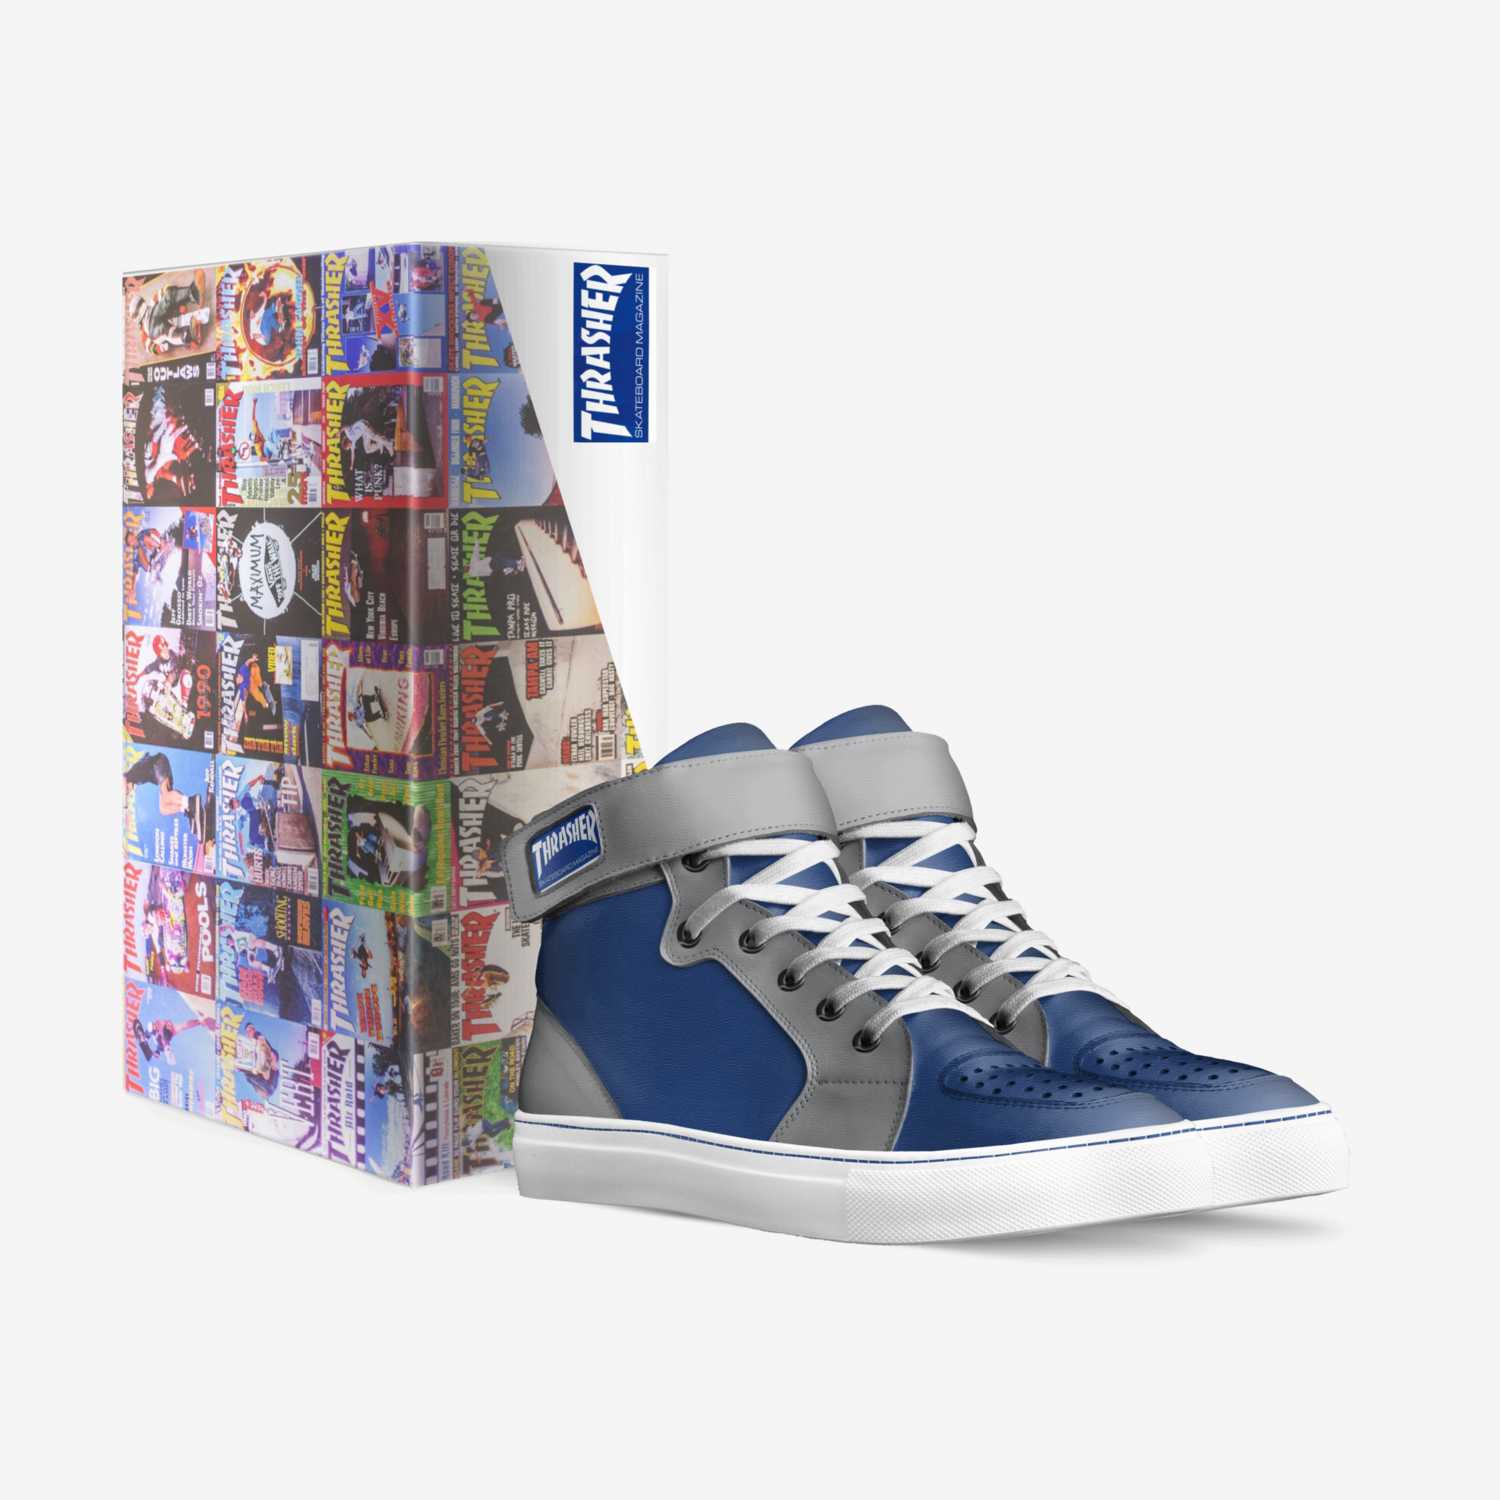 Kickback Flip Blue custom made in Italy shoes by David Martinez | Box view